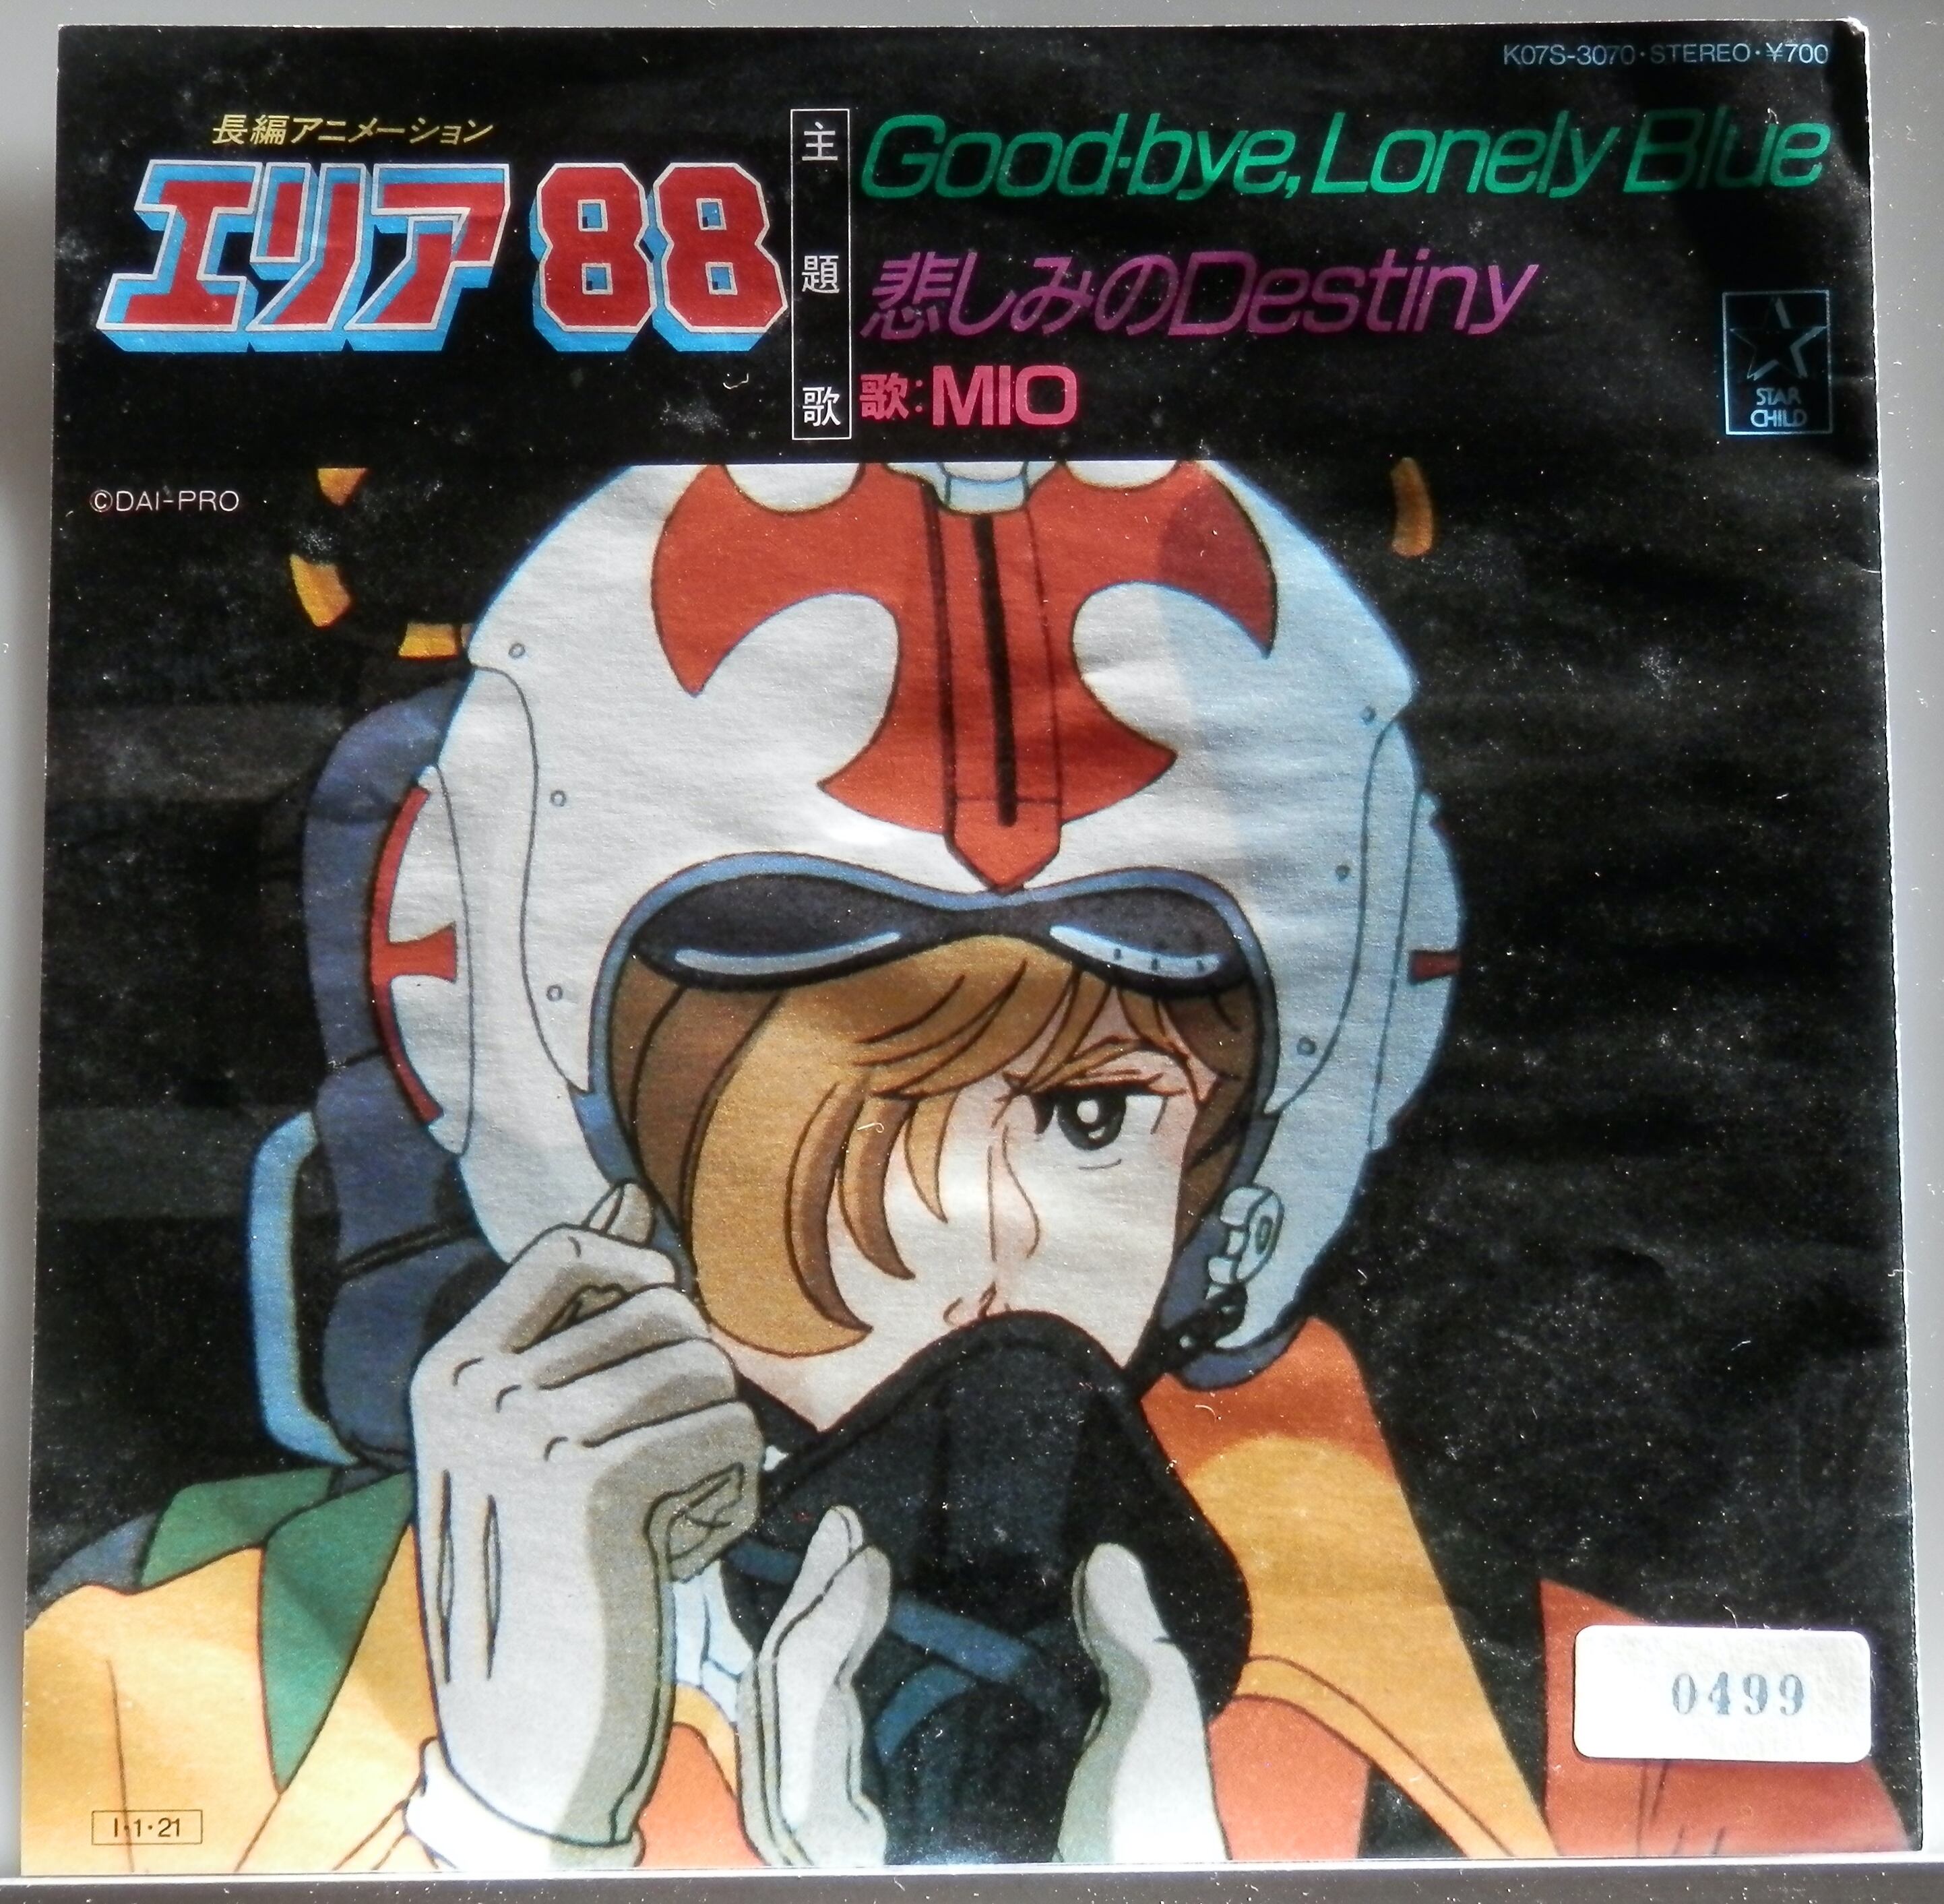 85【EP】MIO - Good-bye Lonely Blue *エリア88/R落 | 音盤窟レコード